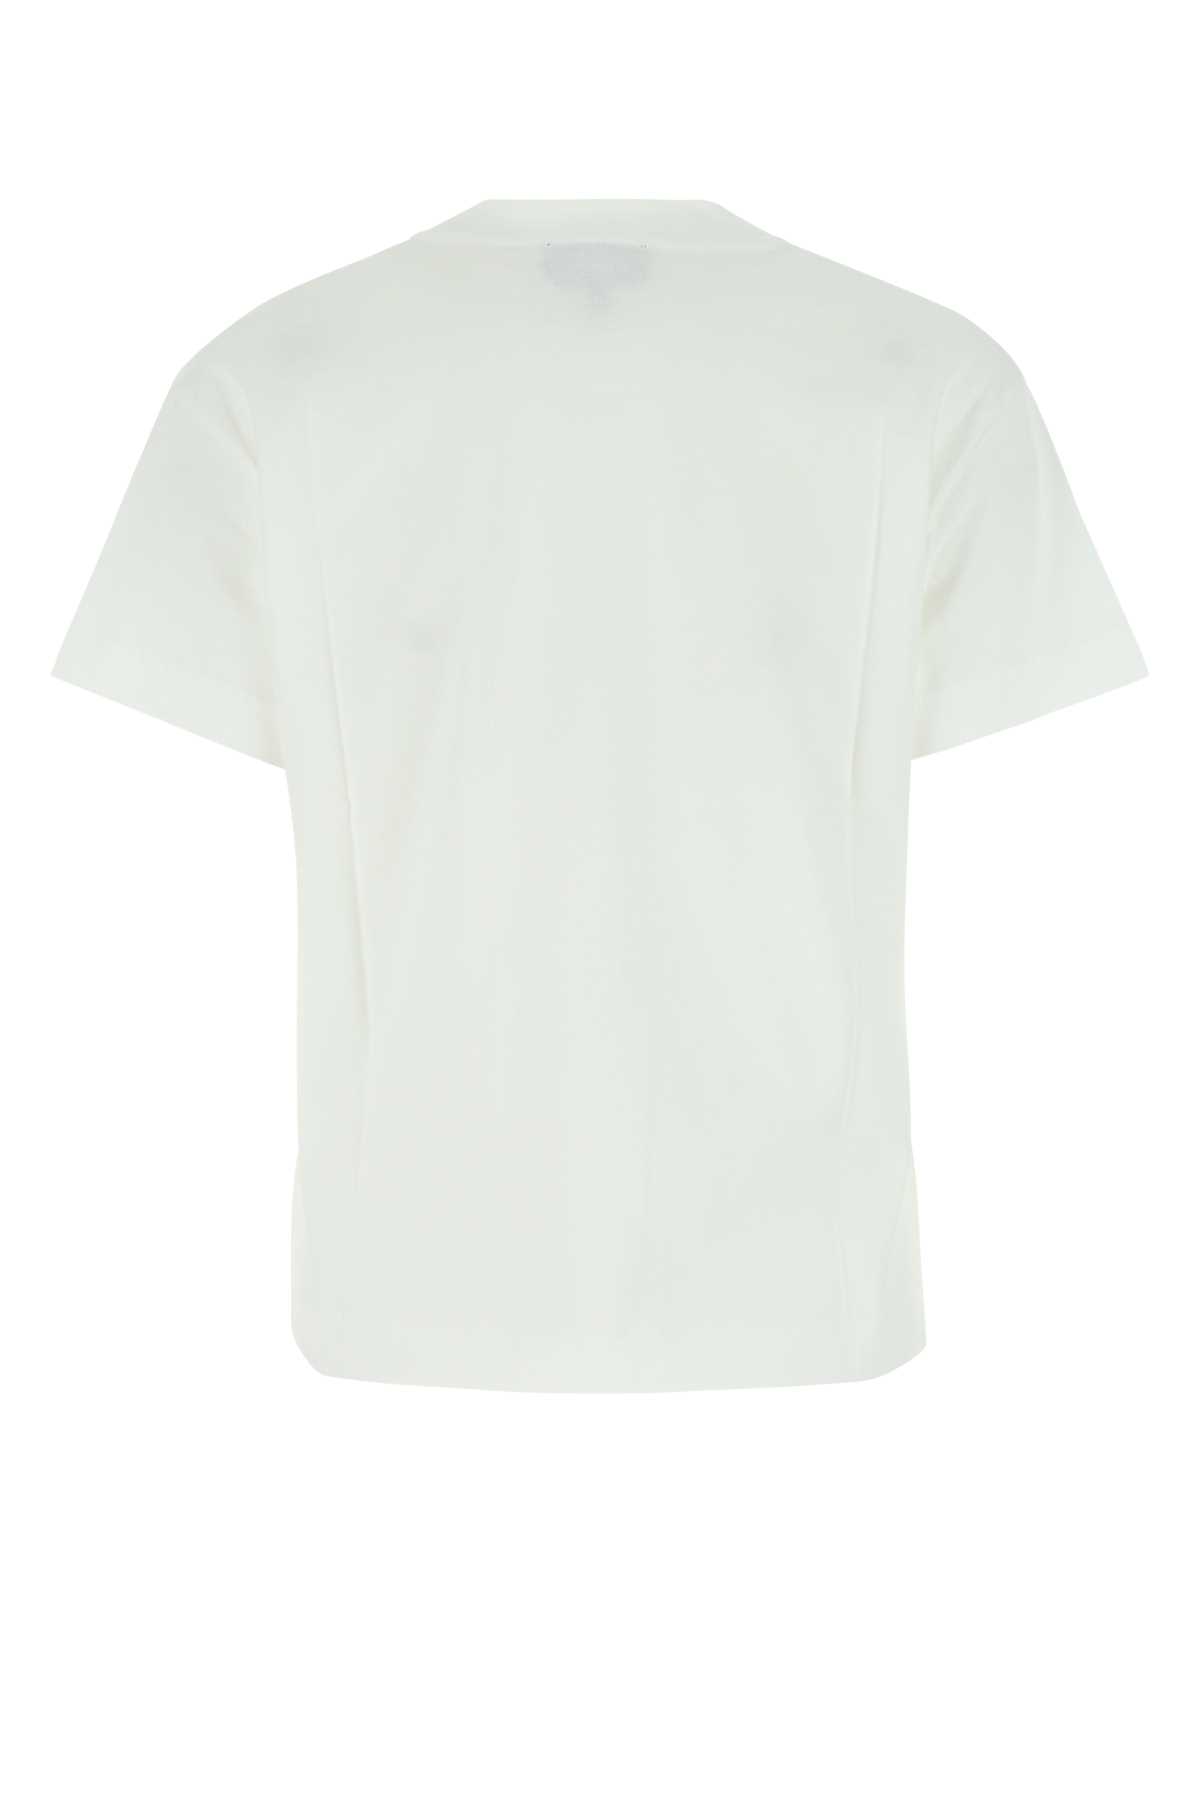 Apc White Cotton T-shirt In Blancrouge